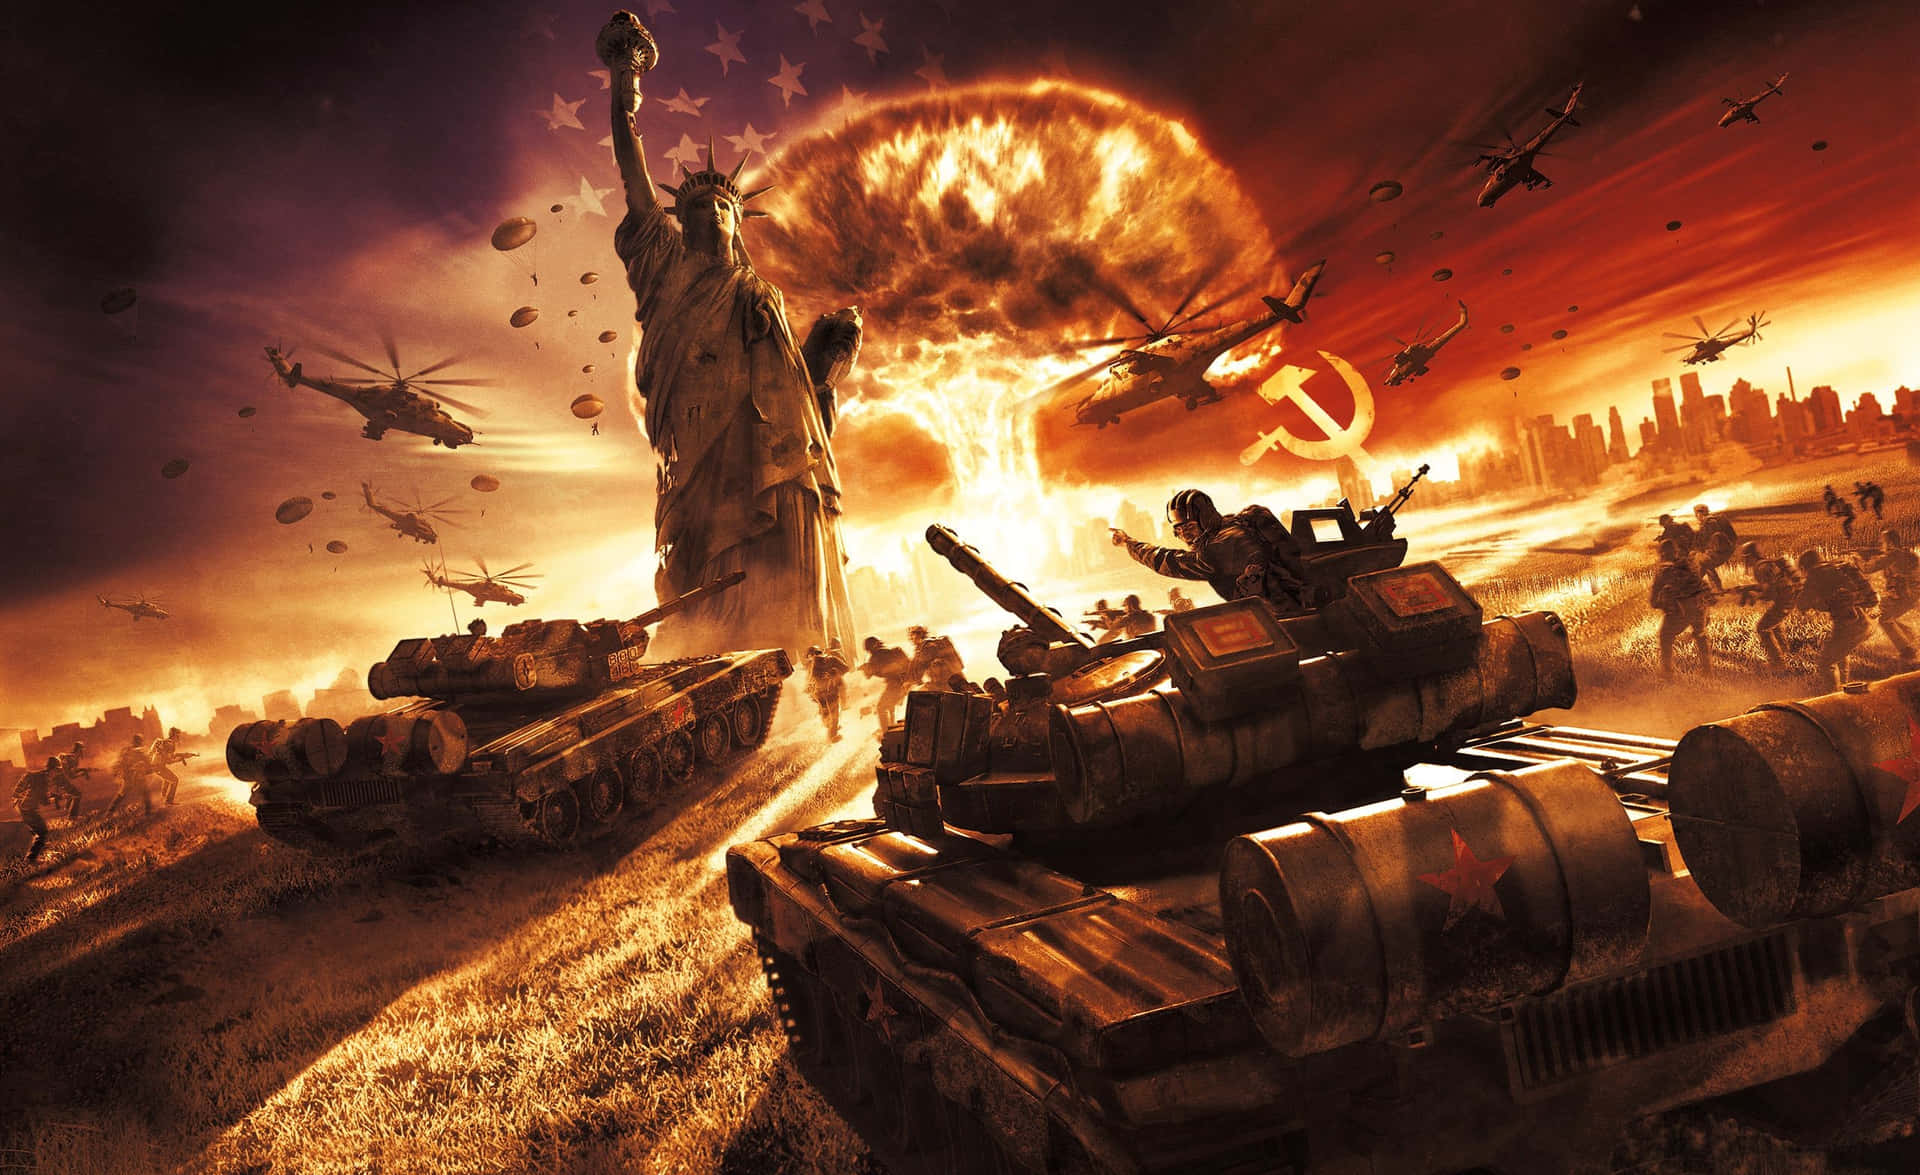 Apocalyptic_ Warfare_ Scene Background